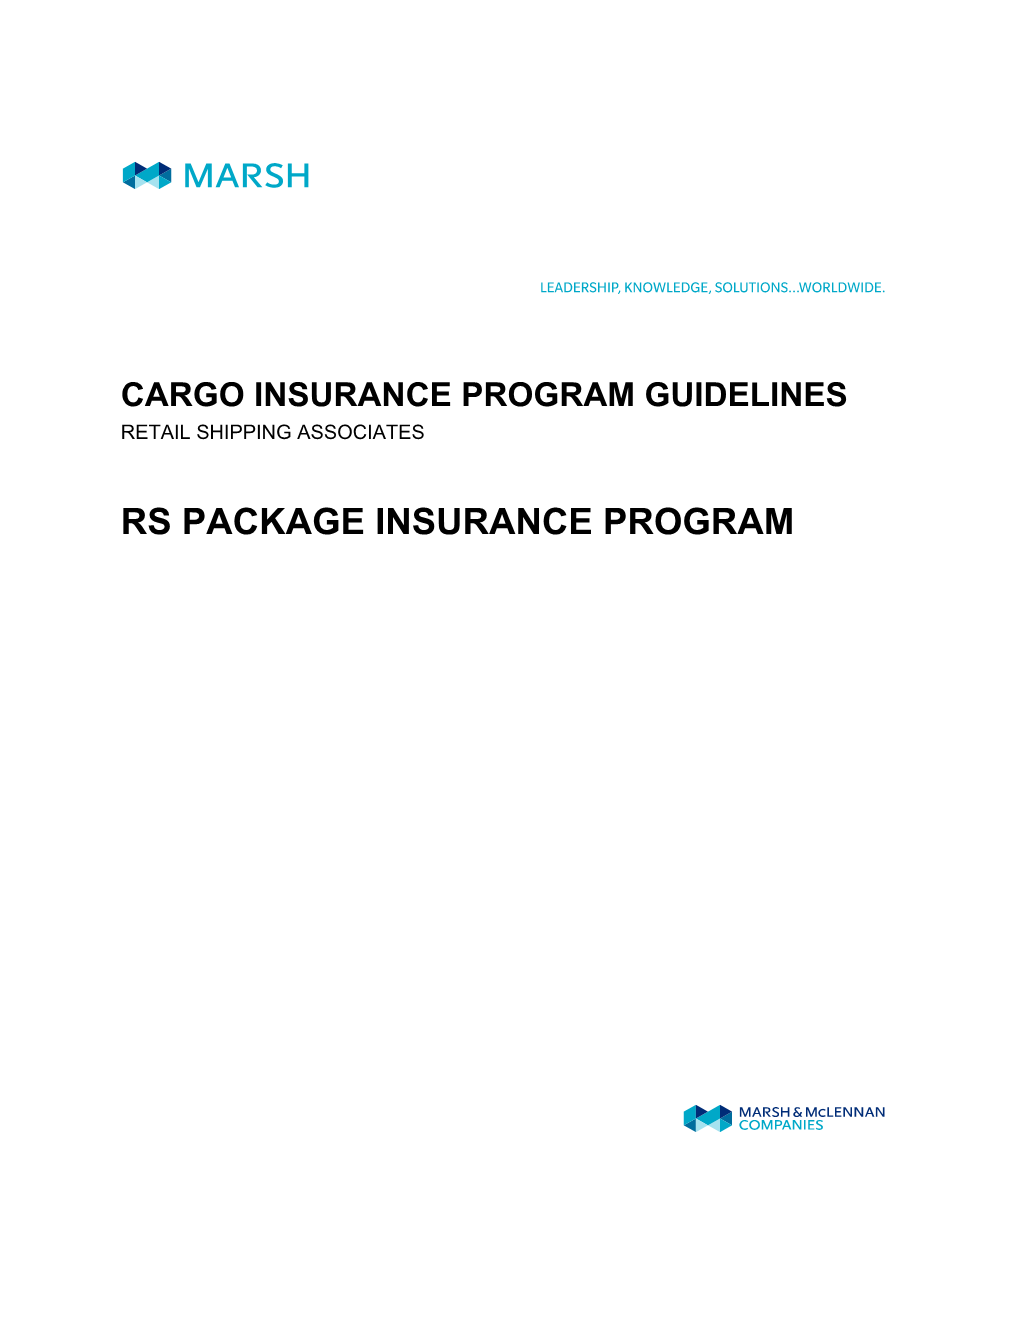 1. RS Package Insurance Program 1